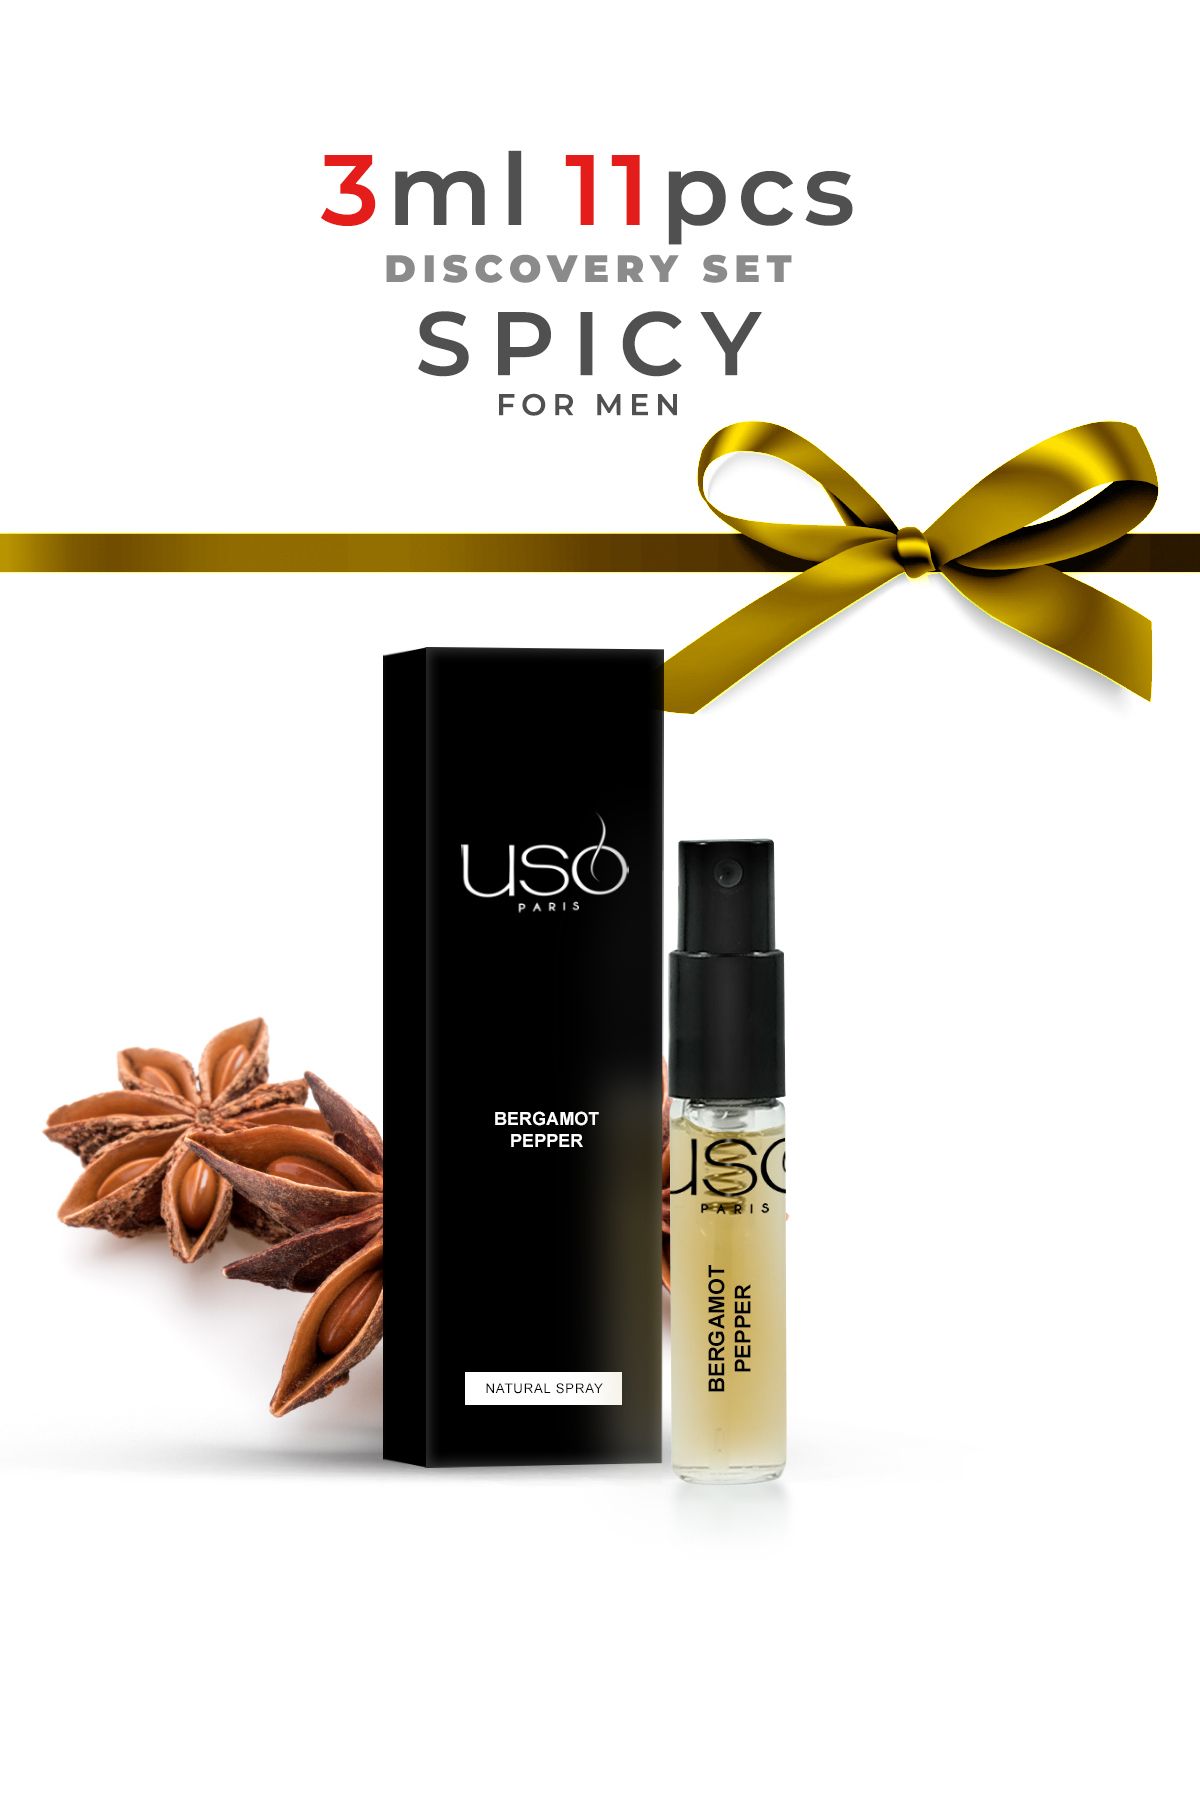 USO Spicy Parfum Discovery Set 3ml X 11 Pcs Men